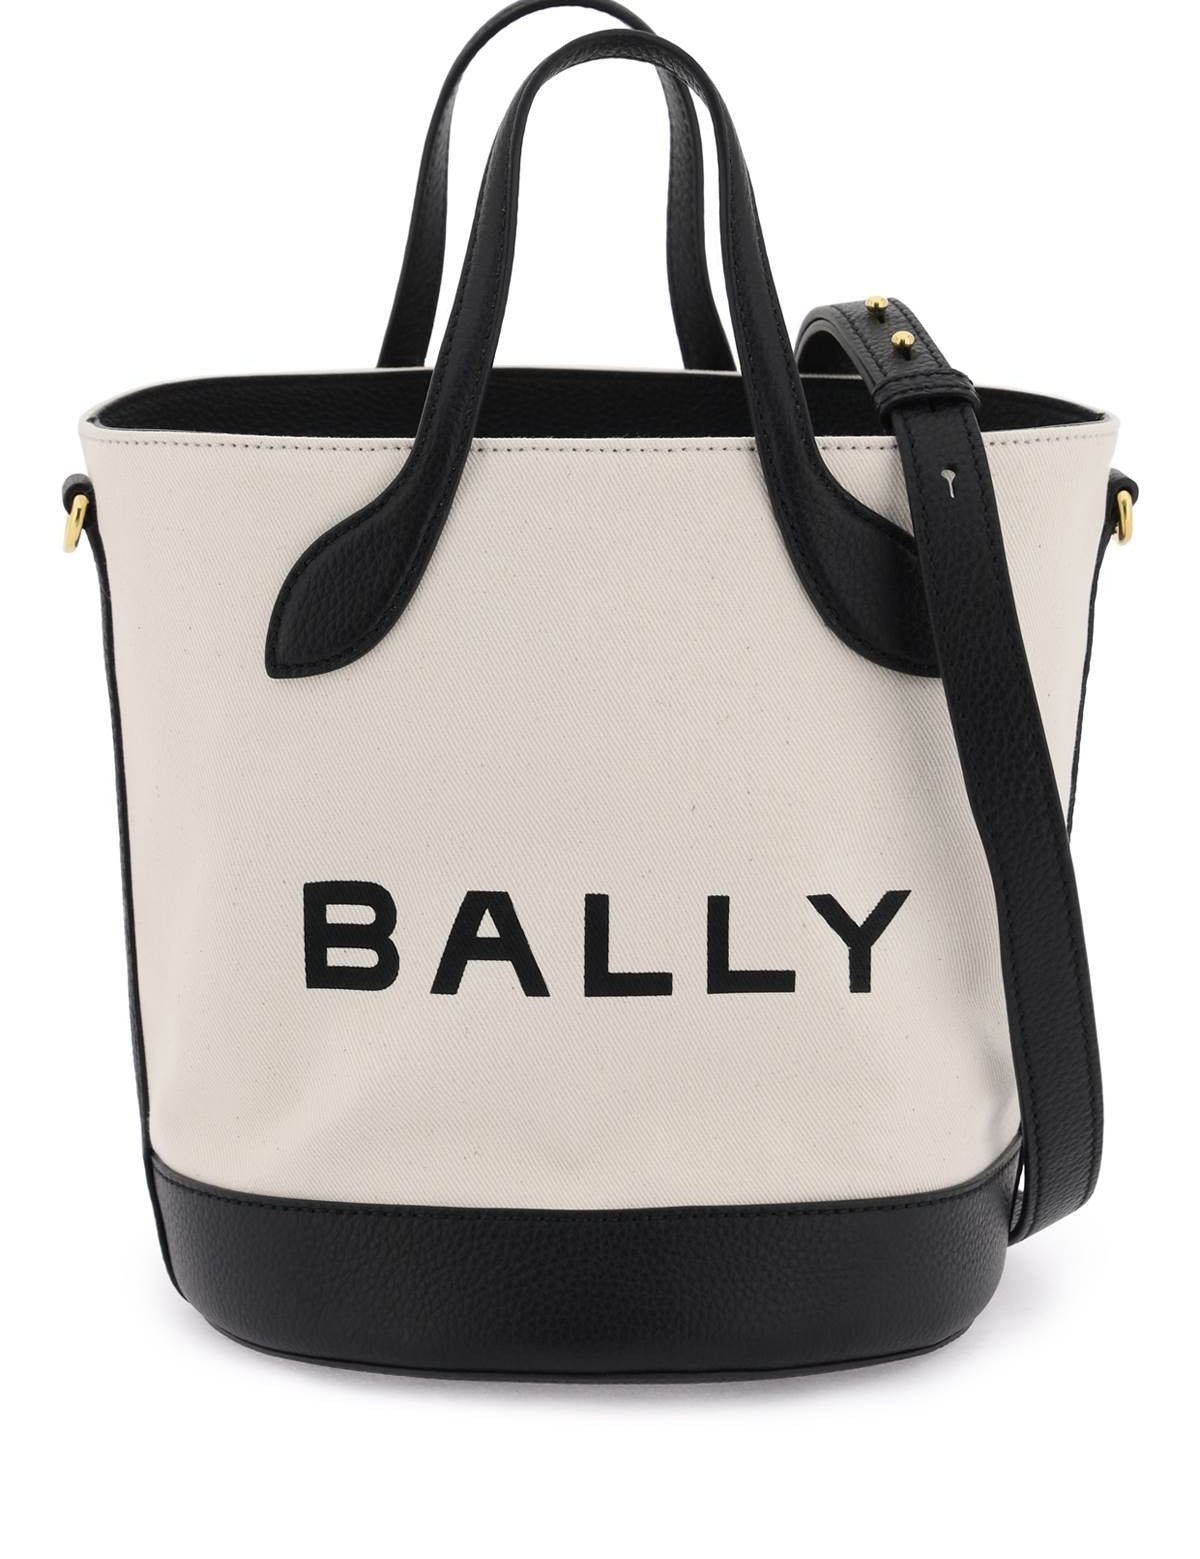 bally-8-hours-bucket-bag.jpg